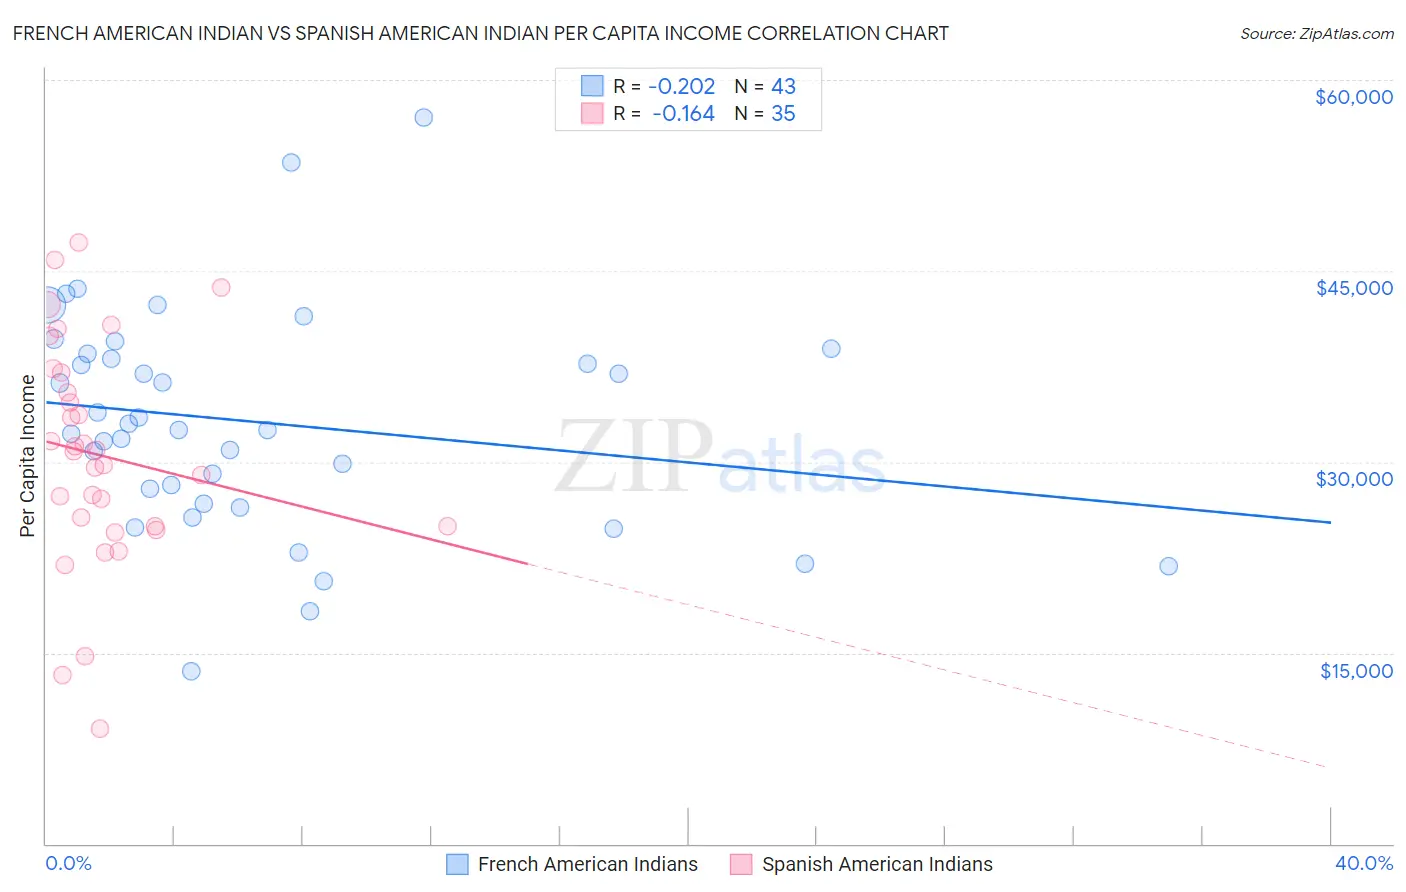 French American Indian vs Spanish American Indian Per Capita Income